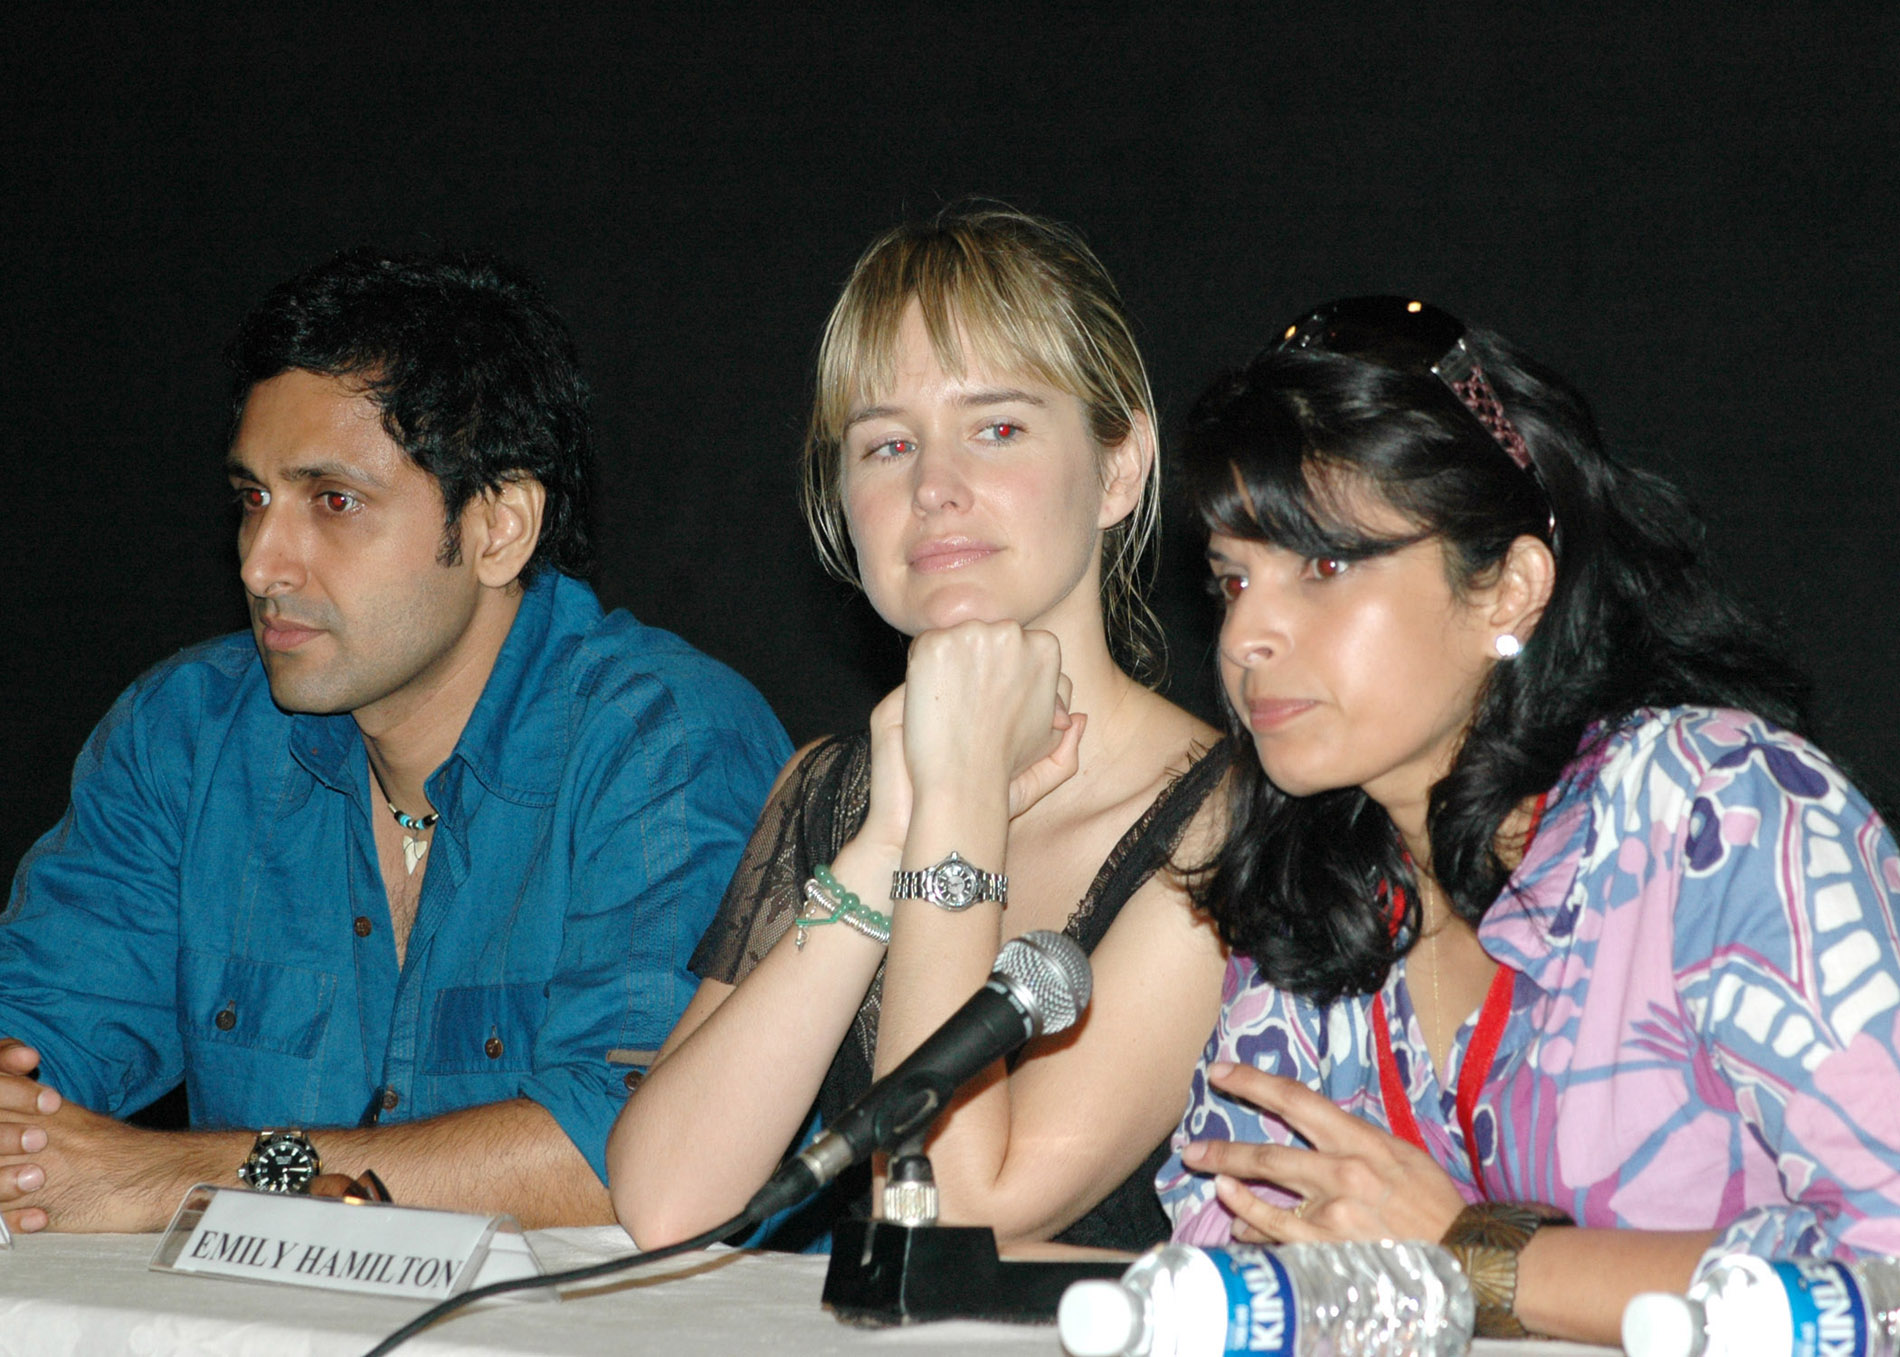 Parvin Dabas,Emily Hamilton and Kruti Majumdar at the International Film Festival Of India promoting 'The Memsahib'